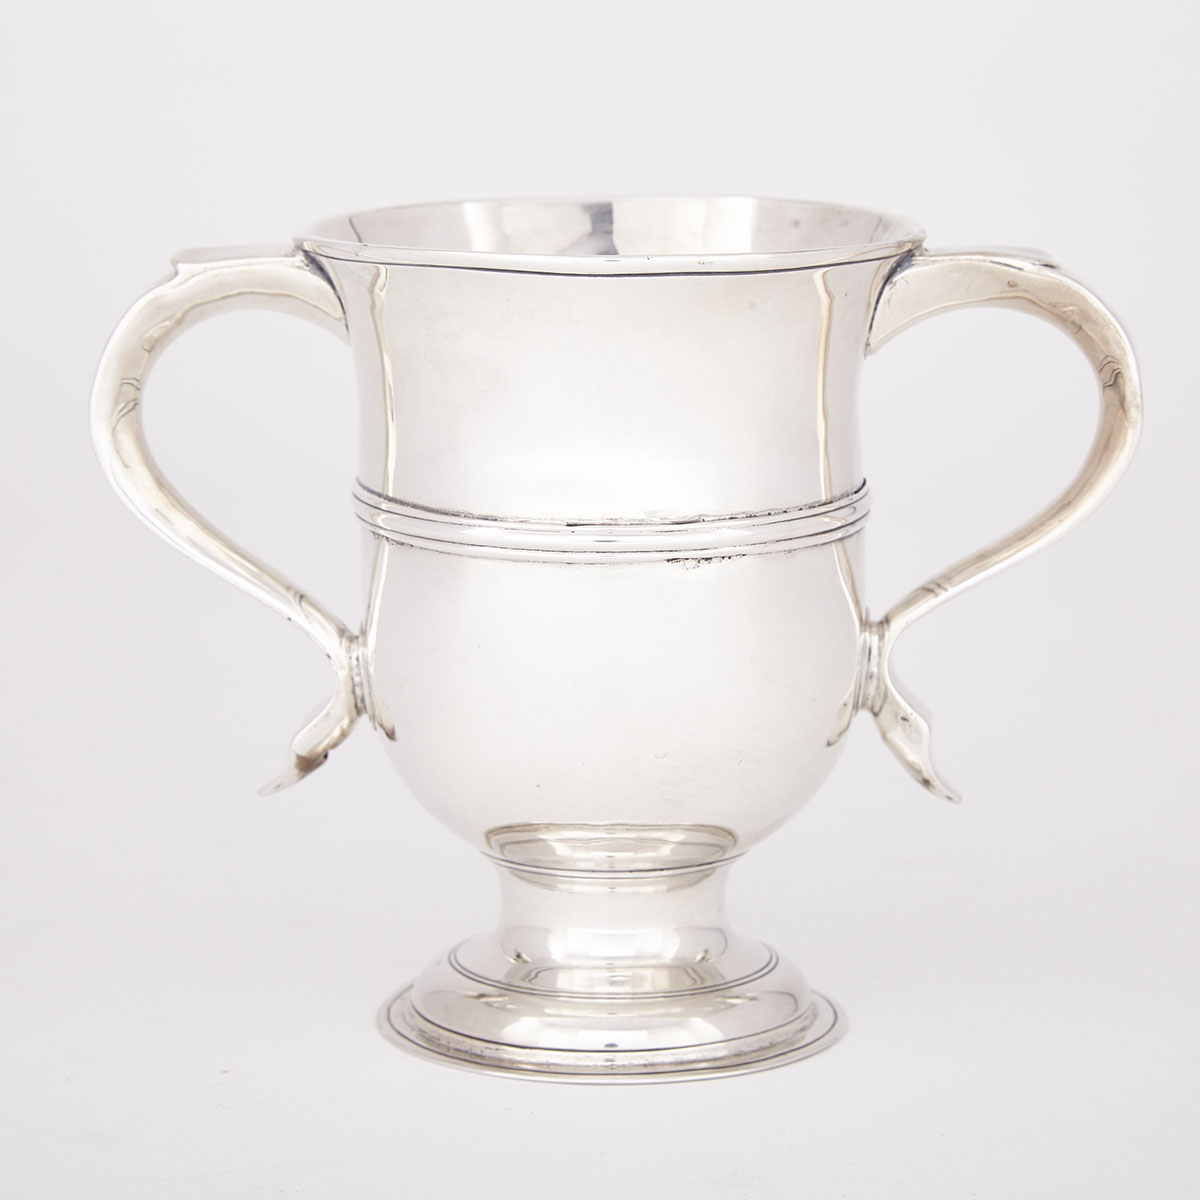 George III Silver Two-Handled Cup, Thomas Wallis I, London, 1771